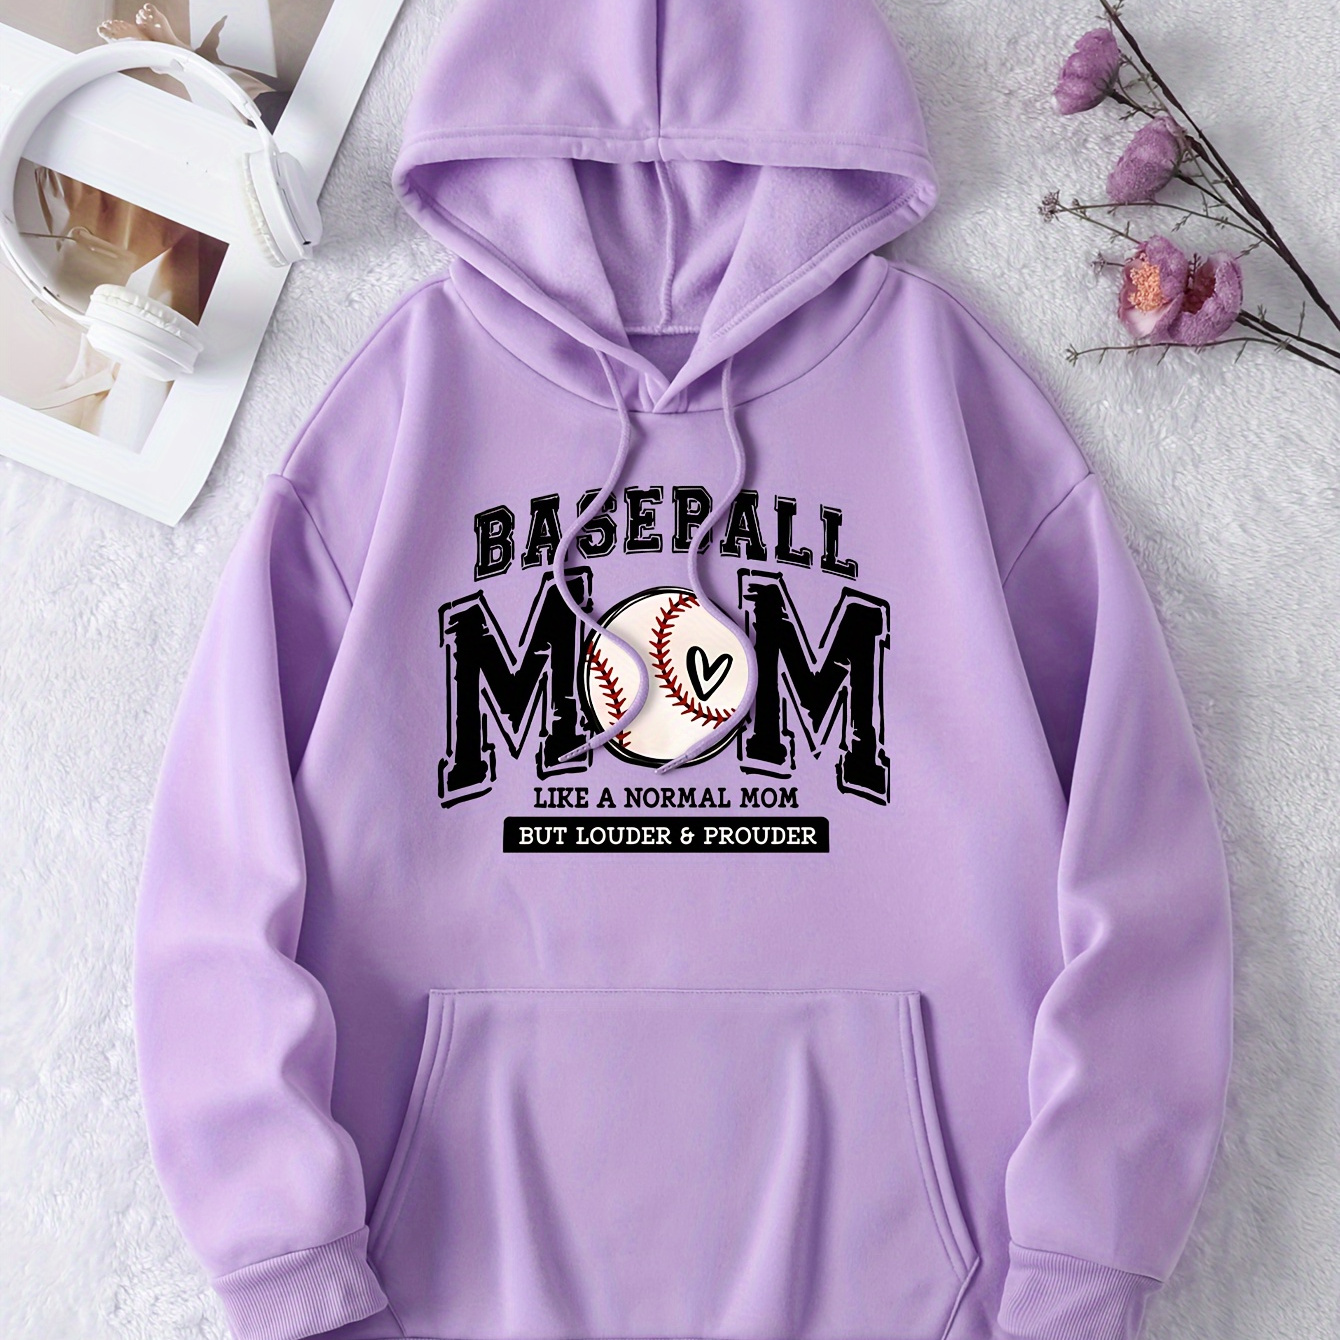 

Baseball Mom Print Kangaroo Pocket Hoodie, Casual Long Sleeve Drawstring Hooded Sweatshirt, Women's Clothing